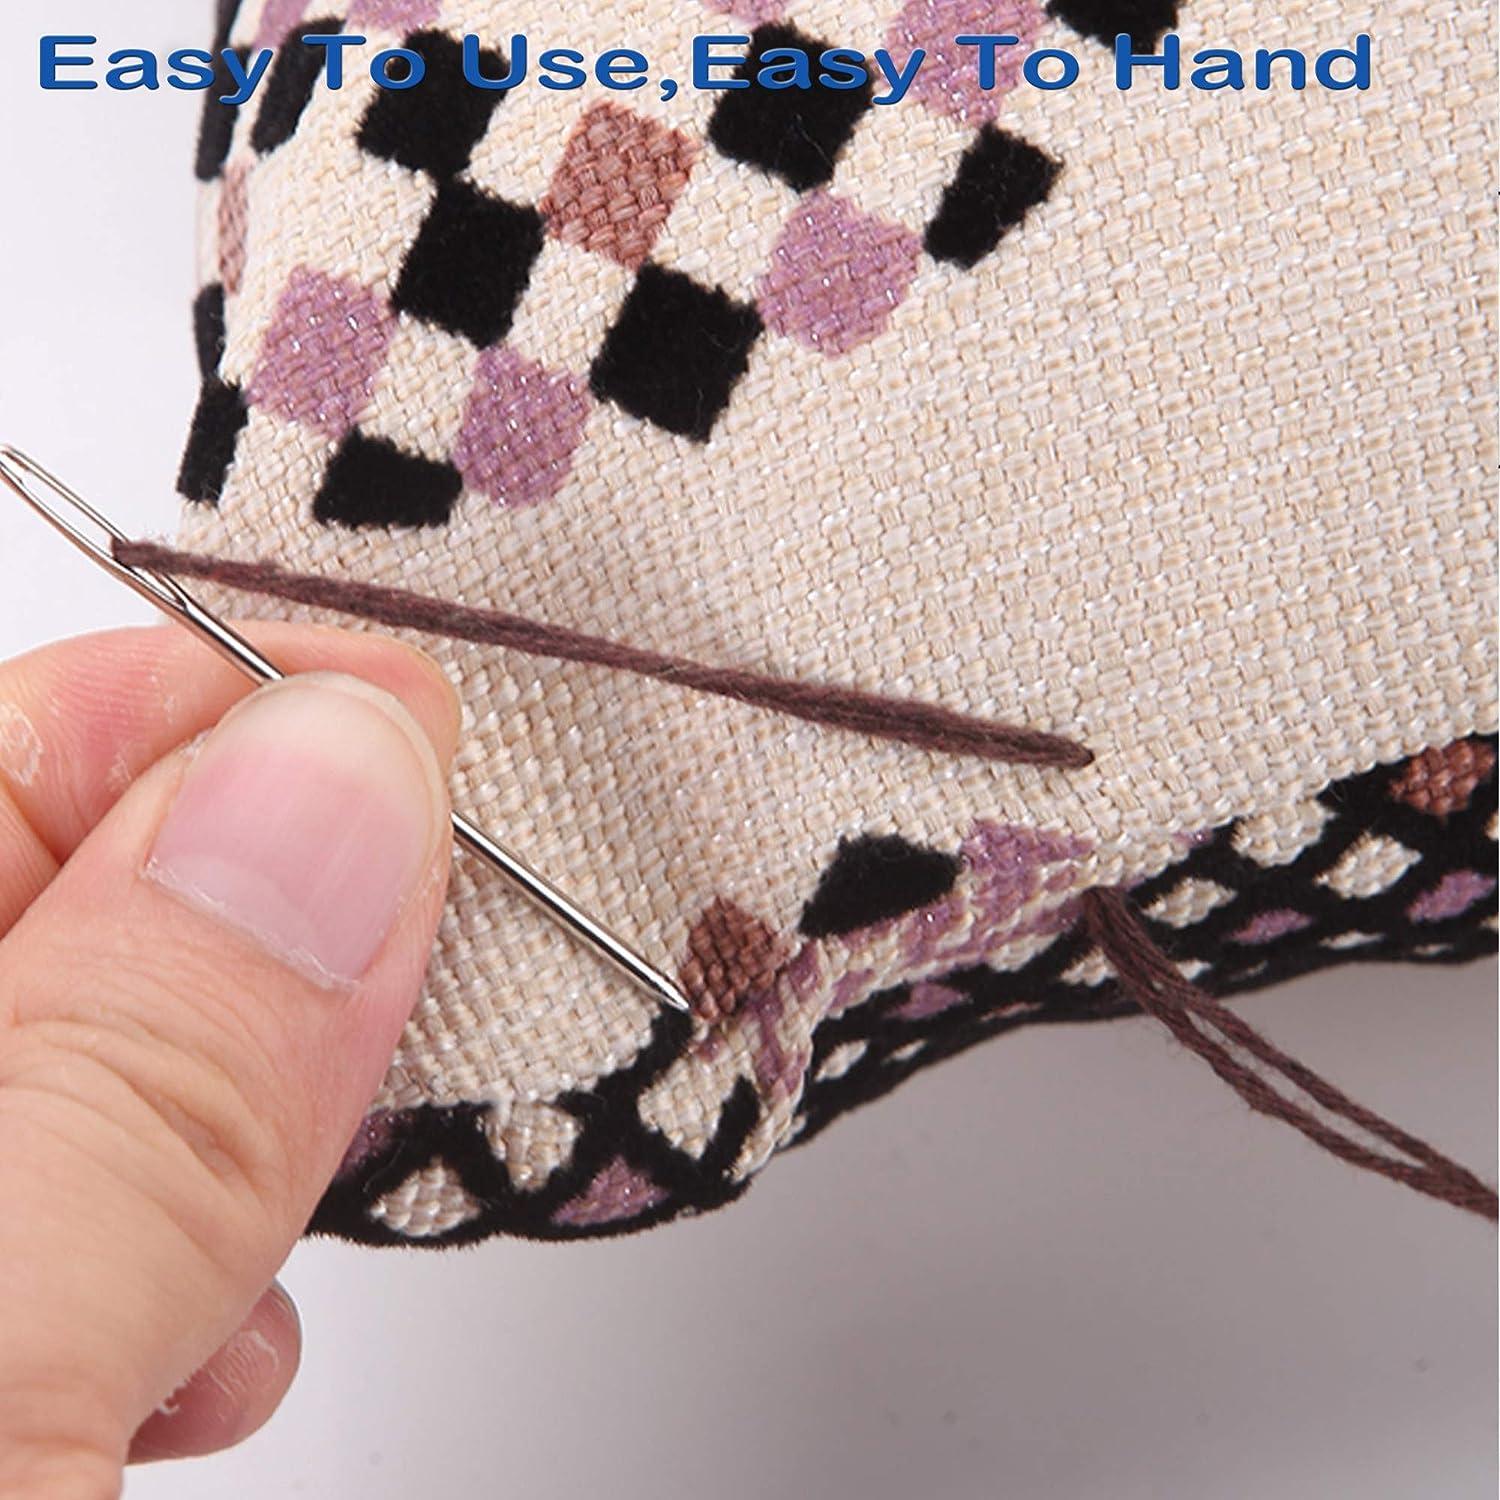 9pcs, Large-Eye Blunt Needles, Stainless Steel Yarn Knitting Needles,  Sewing Needles, Crafting Knitting Weaving Stringing Needles,Perfect For  Finishin